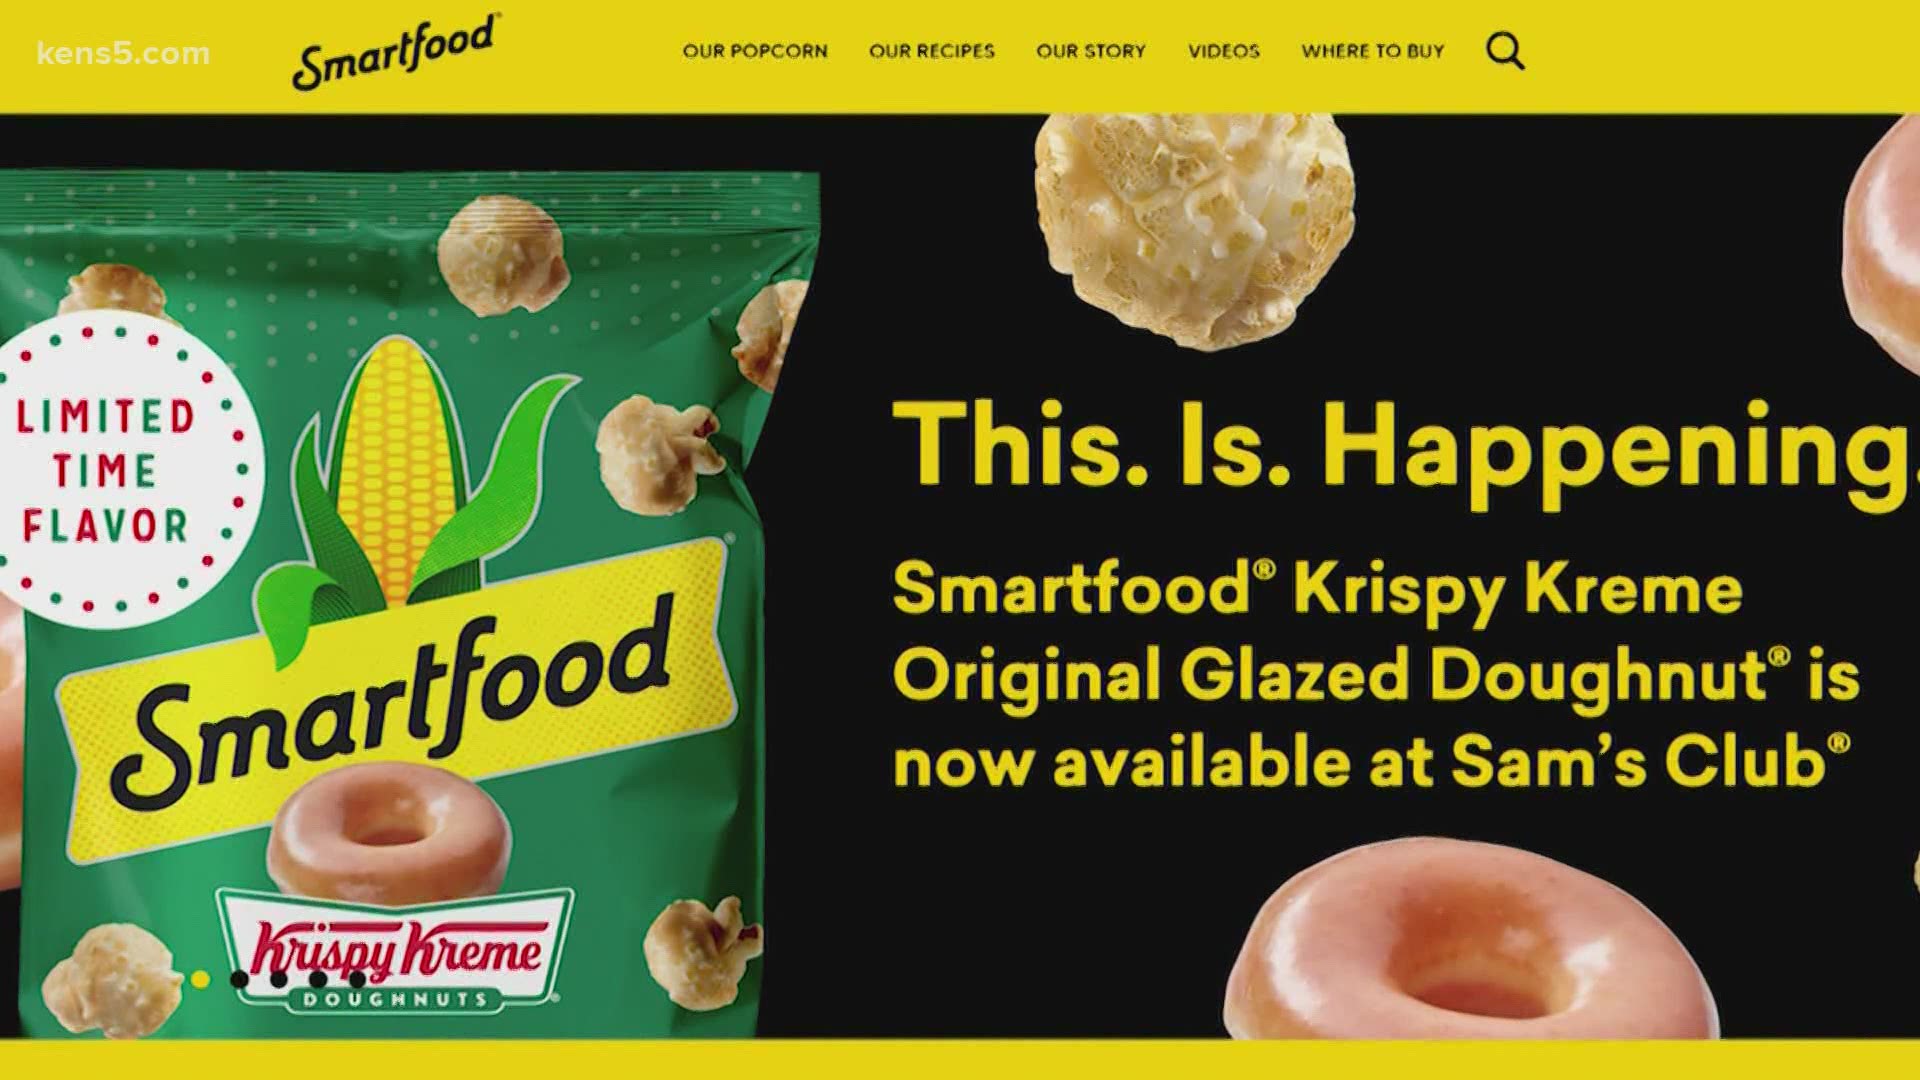 Smartfood is teaming up with Krispy Kreme to create popcorn flavored like its glazed doughnuts.